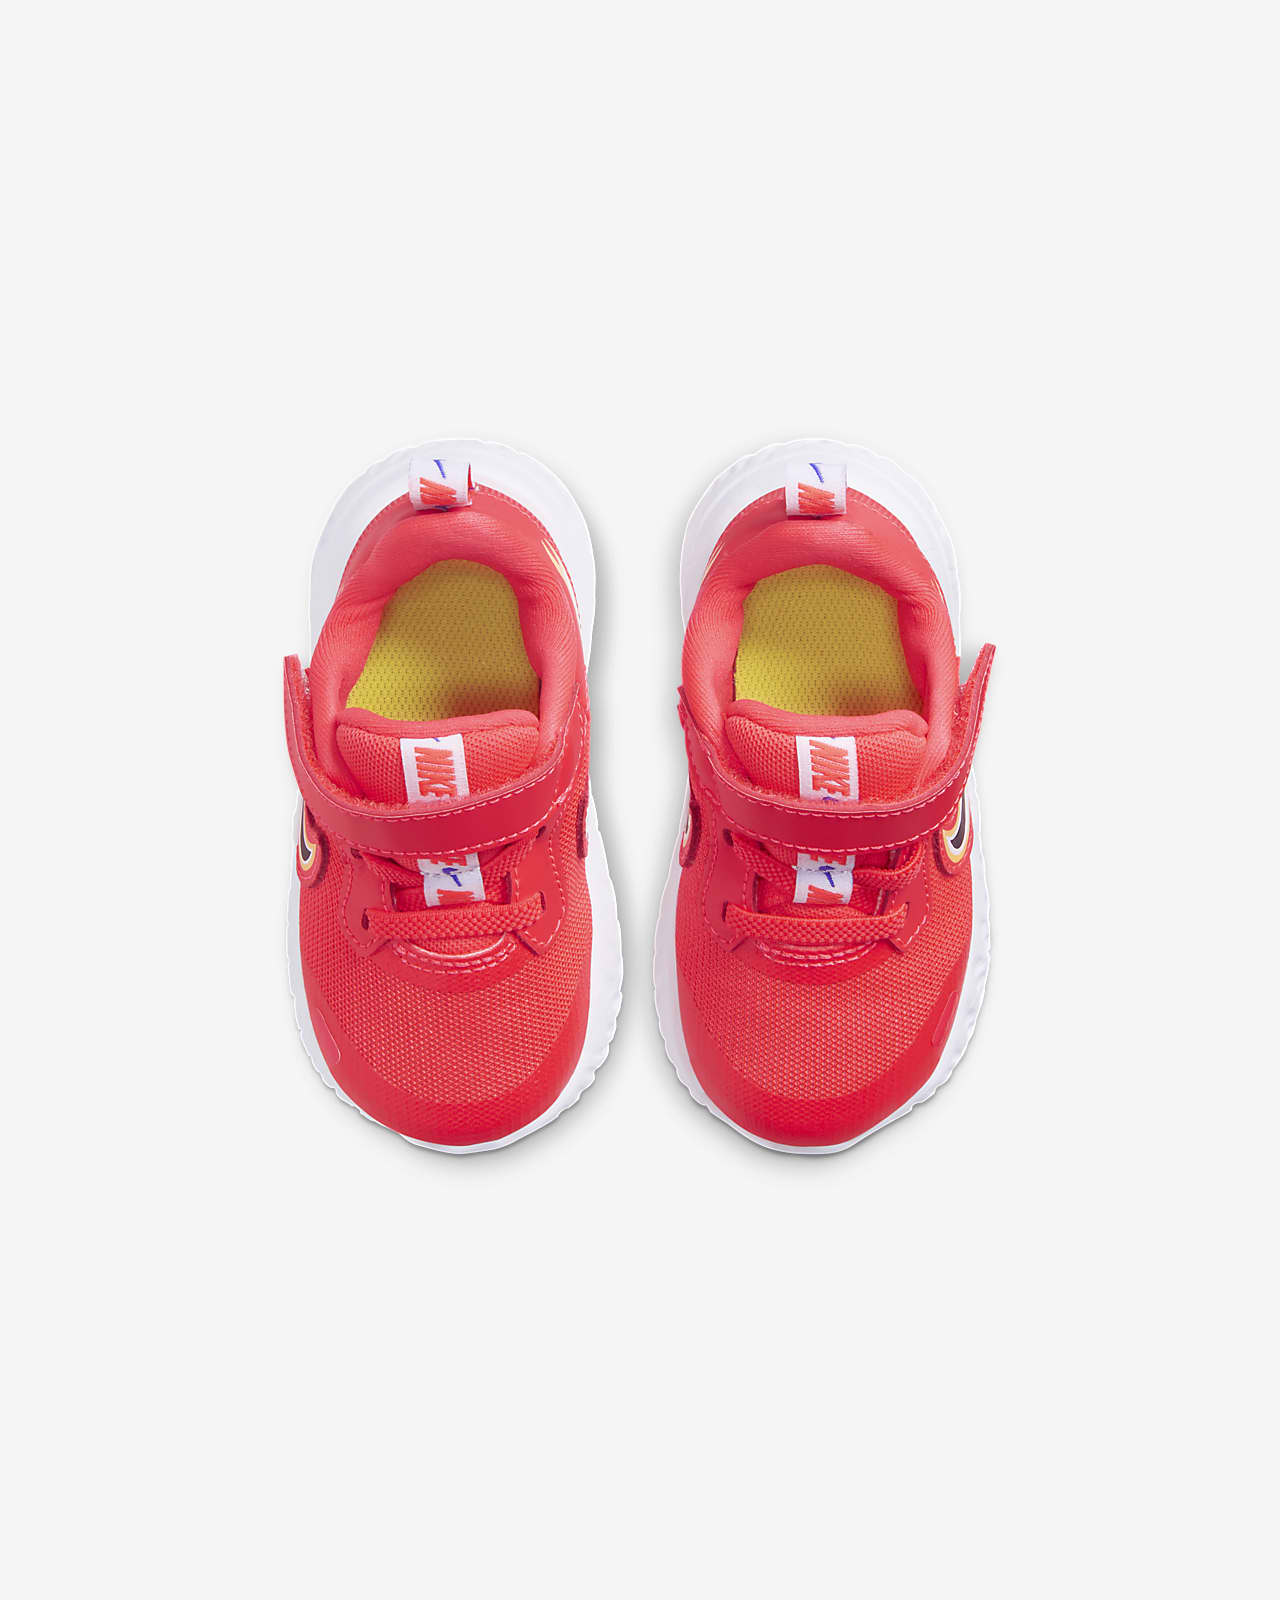 Sepatu Nike kyrie 5 gary snail Pink Basket womens Shopee